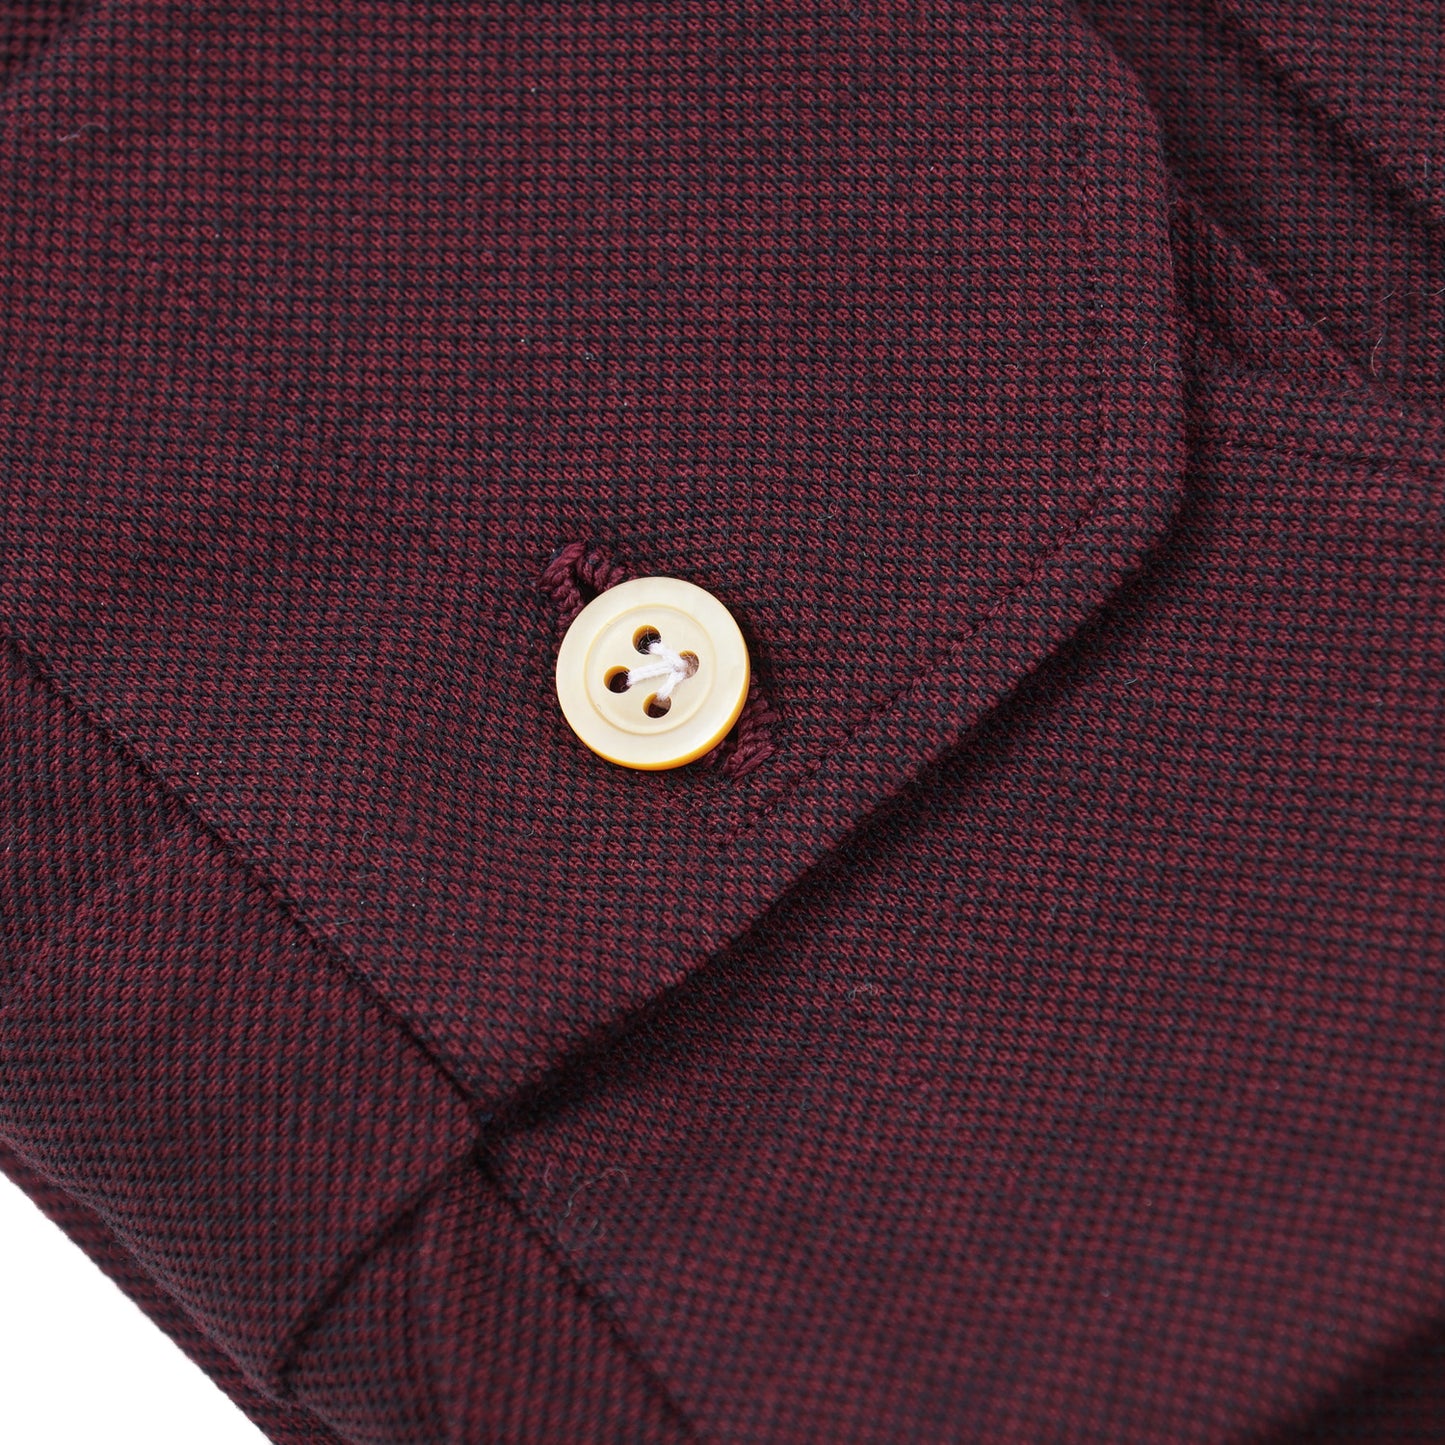 Kiton Pique Knit Jersey Cotton Shirt - Top Shelf Apparel